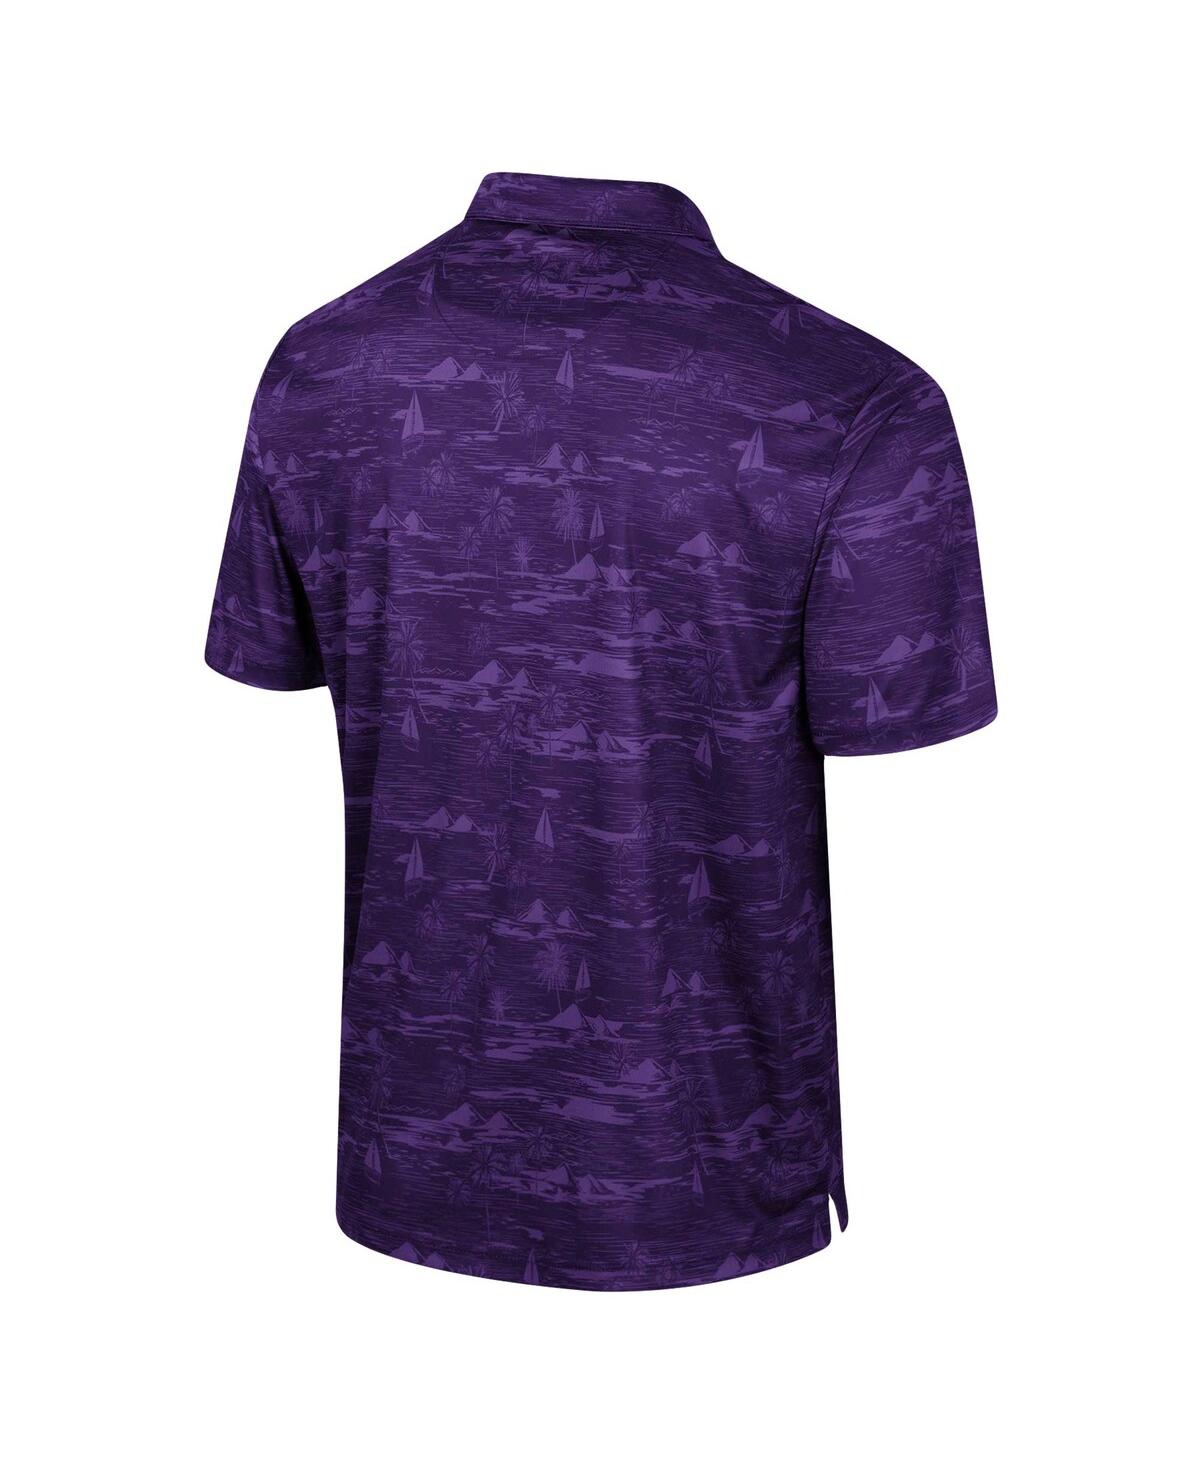 Shop Colosseum Men's  Purple Lsu Tigers Daly Print Polo Shirt